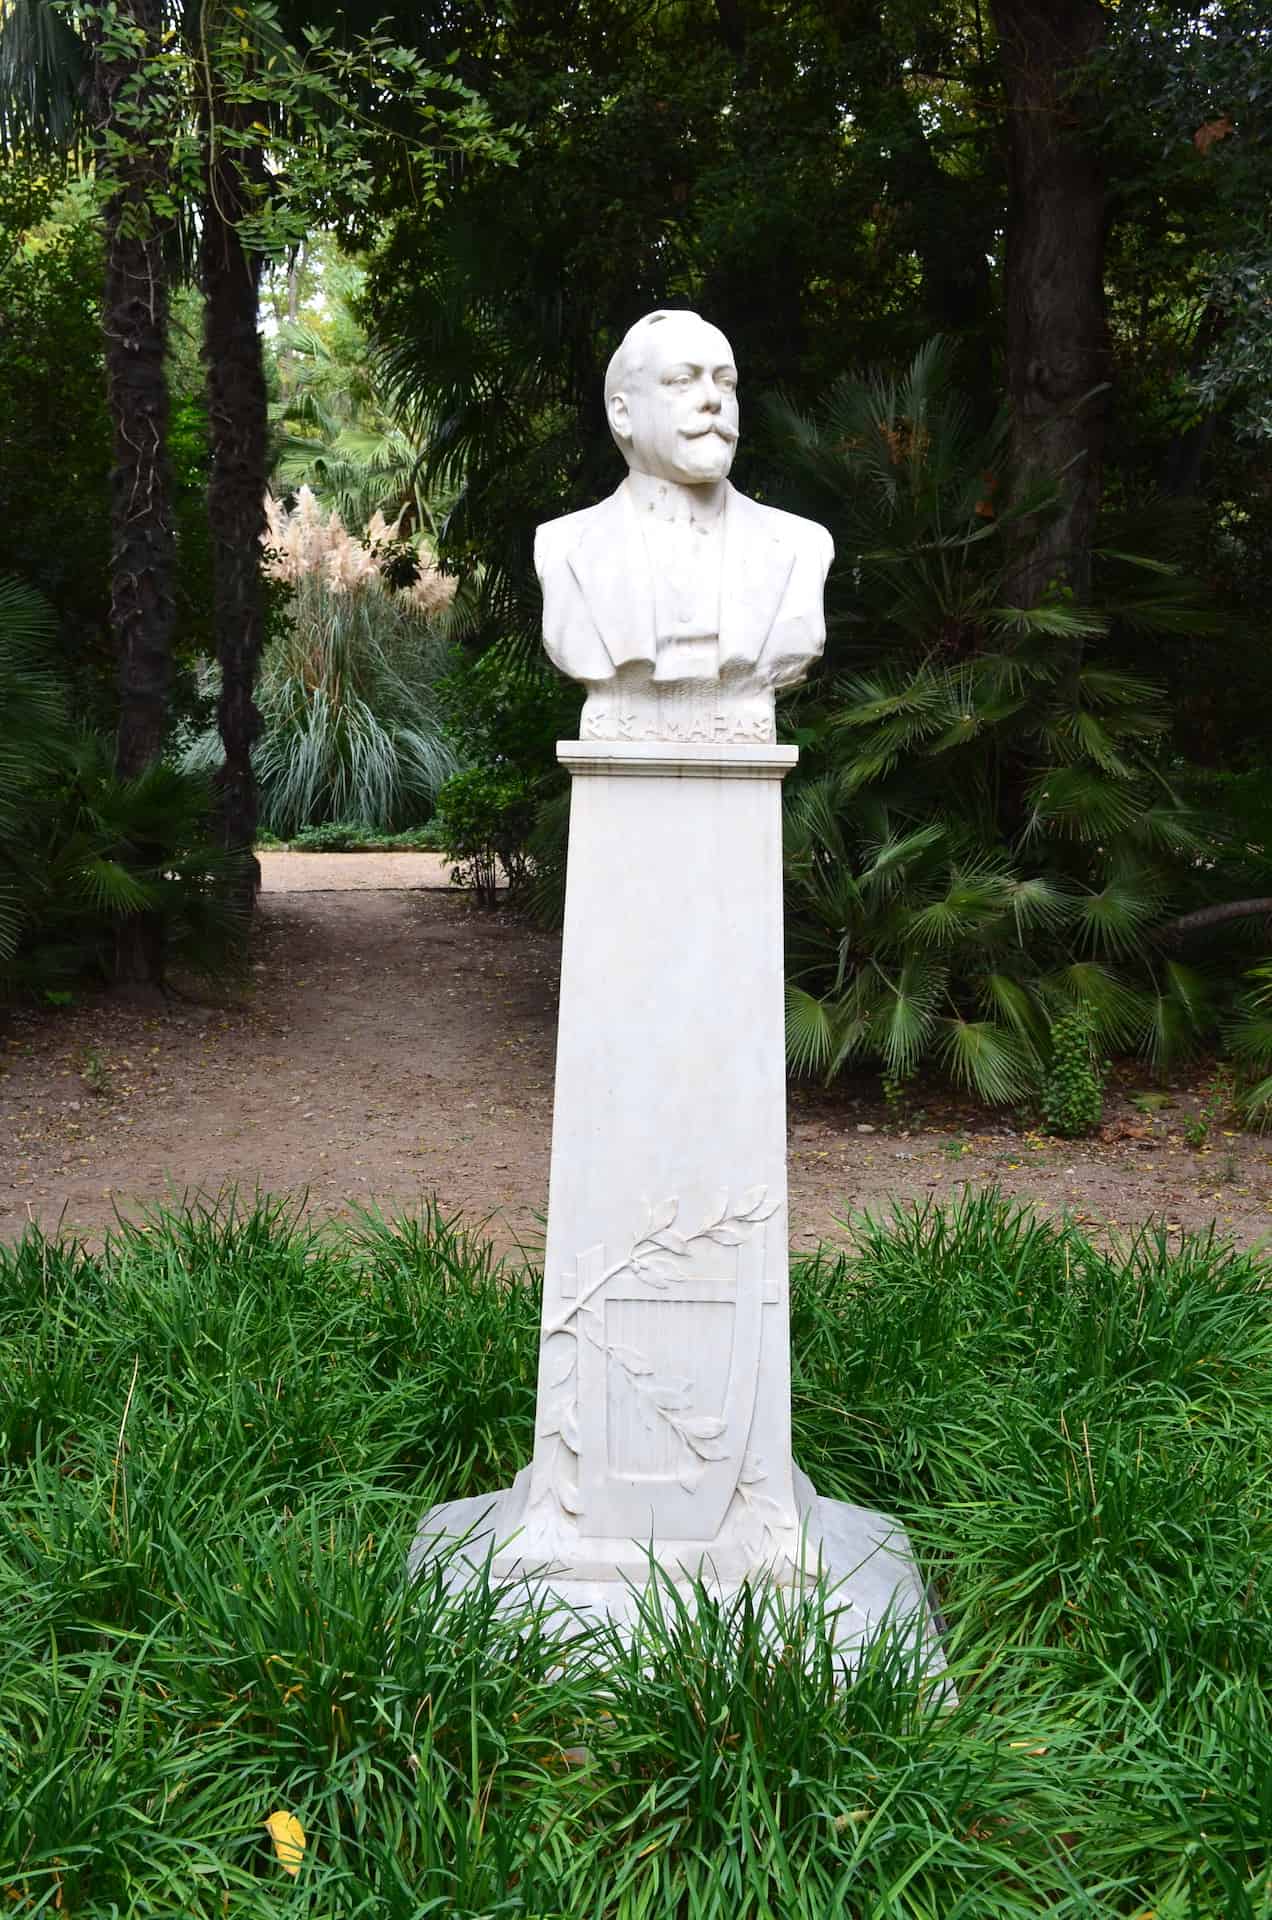 Bust of Spyros Samaras at the National Garden in Athens, Greece